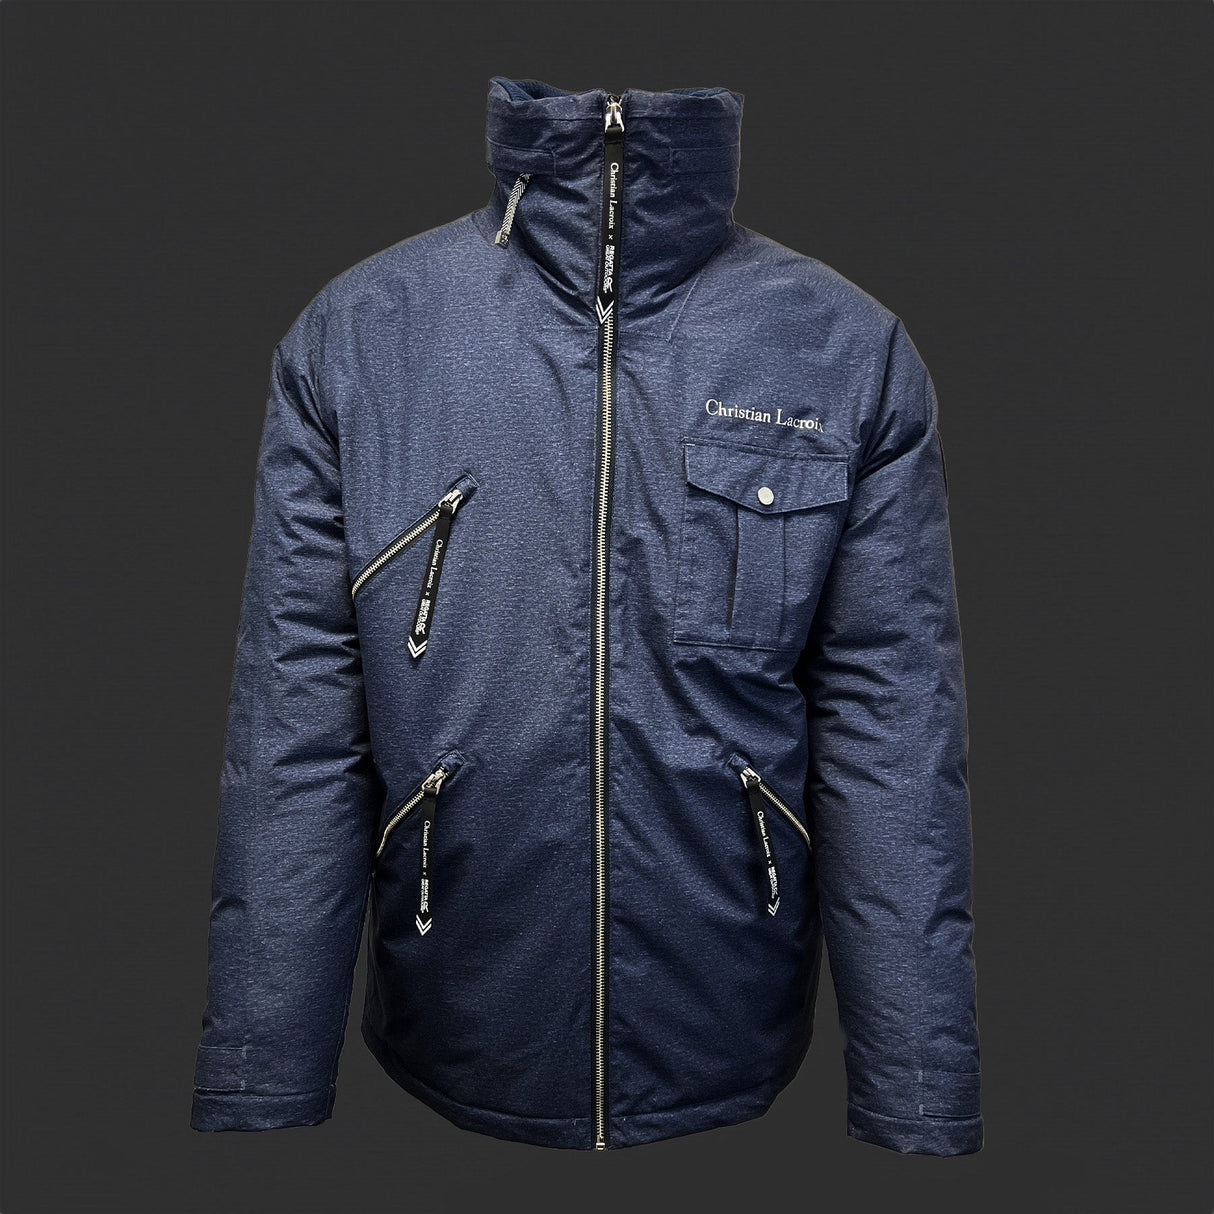 Christian Lacroix - Mens Seguret Jacket - Premium clothing from Regatta - Just $49.99! Shop now at Warwickshire Clothing